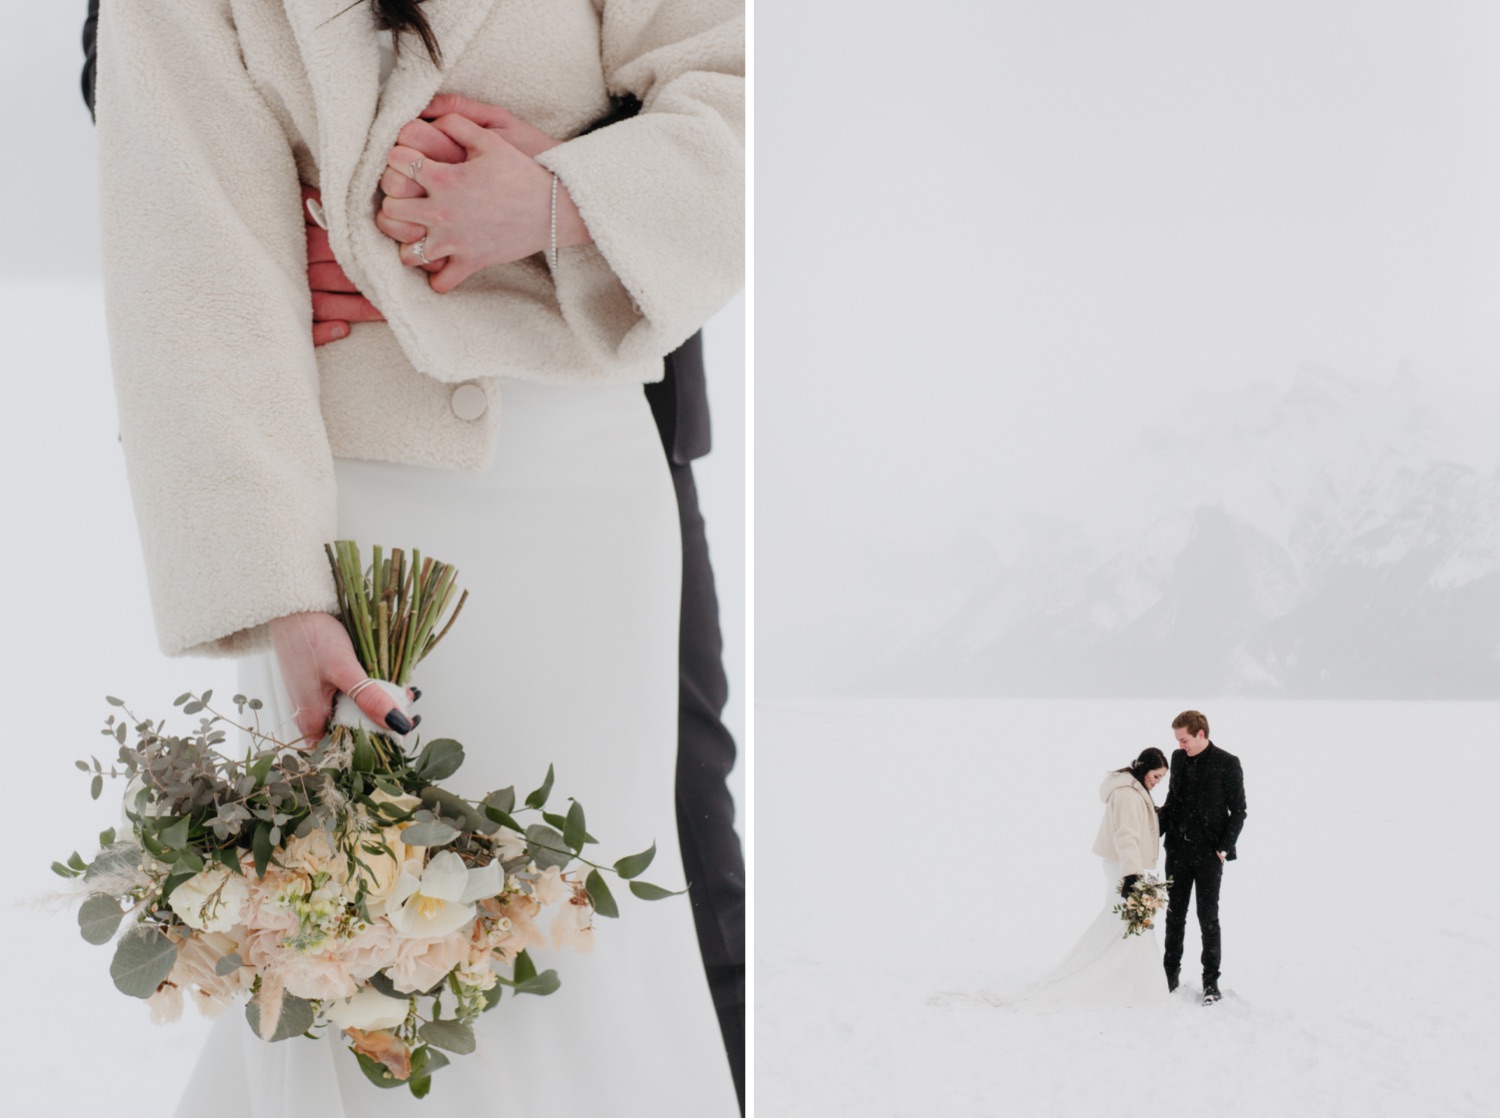 Winter wedding portraits at Lake Minnewanka during a snowstorm